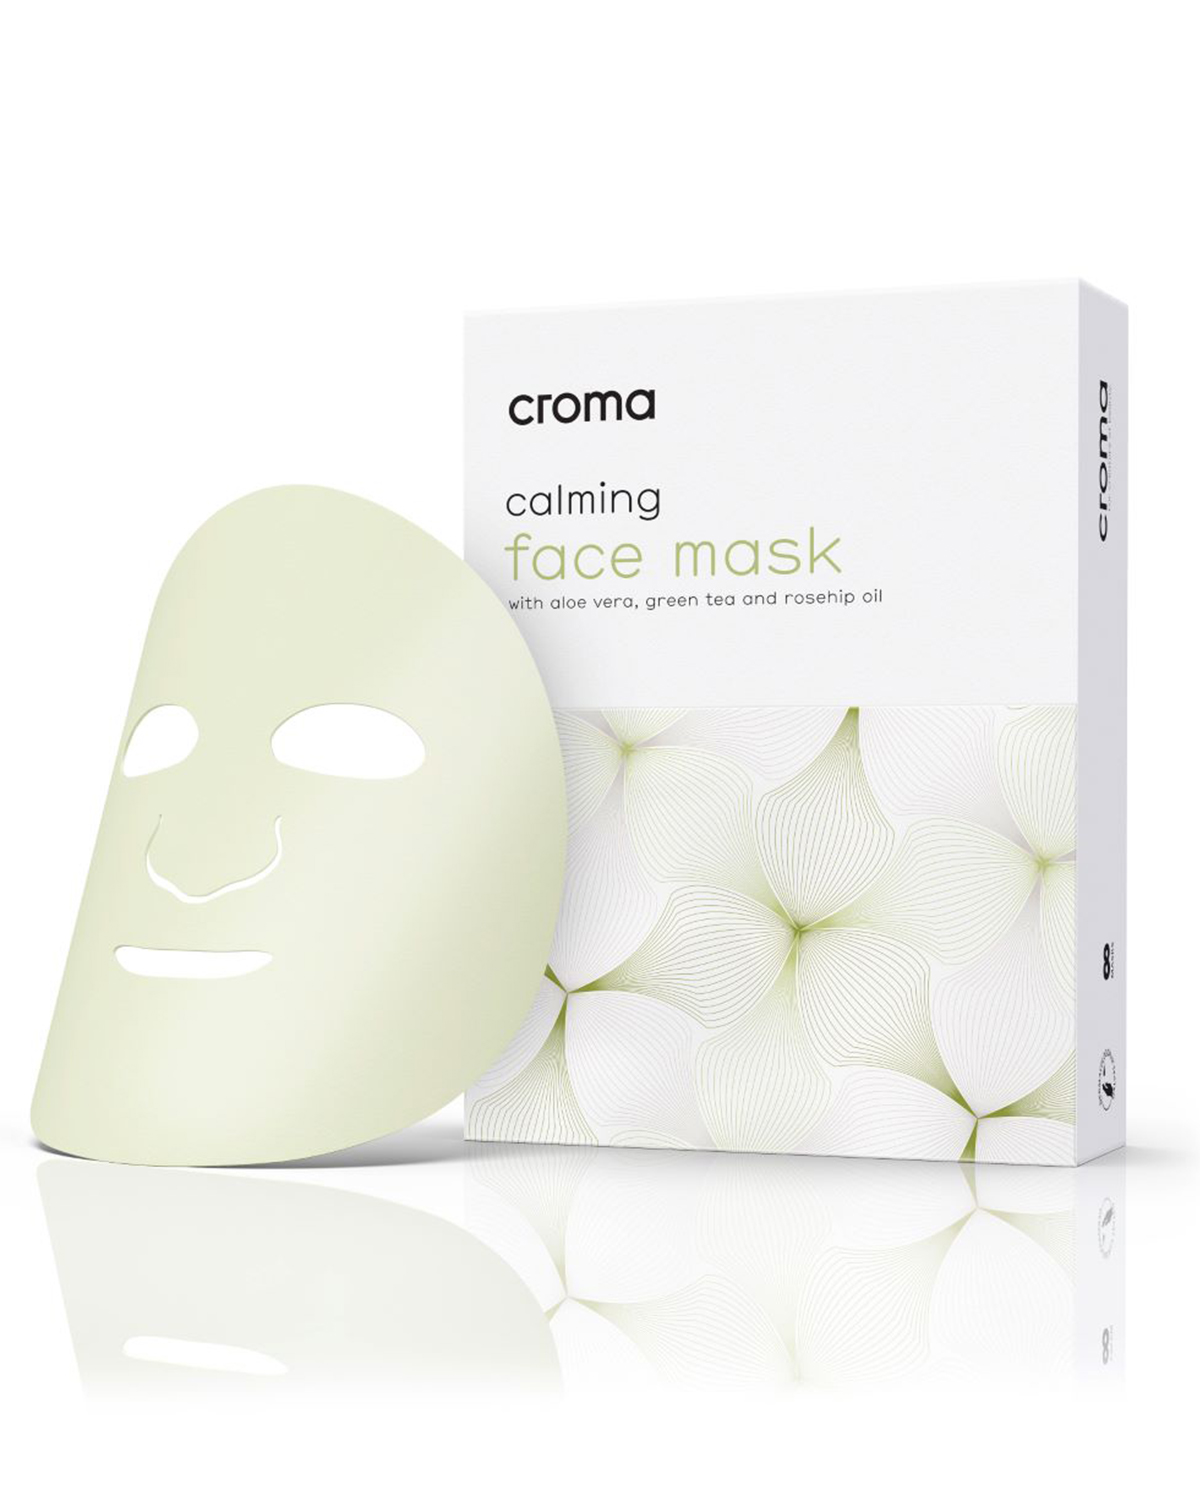 Croma calming face mask sRGB Large 1